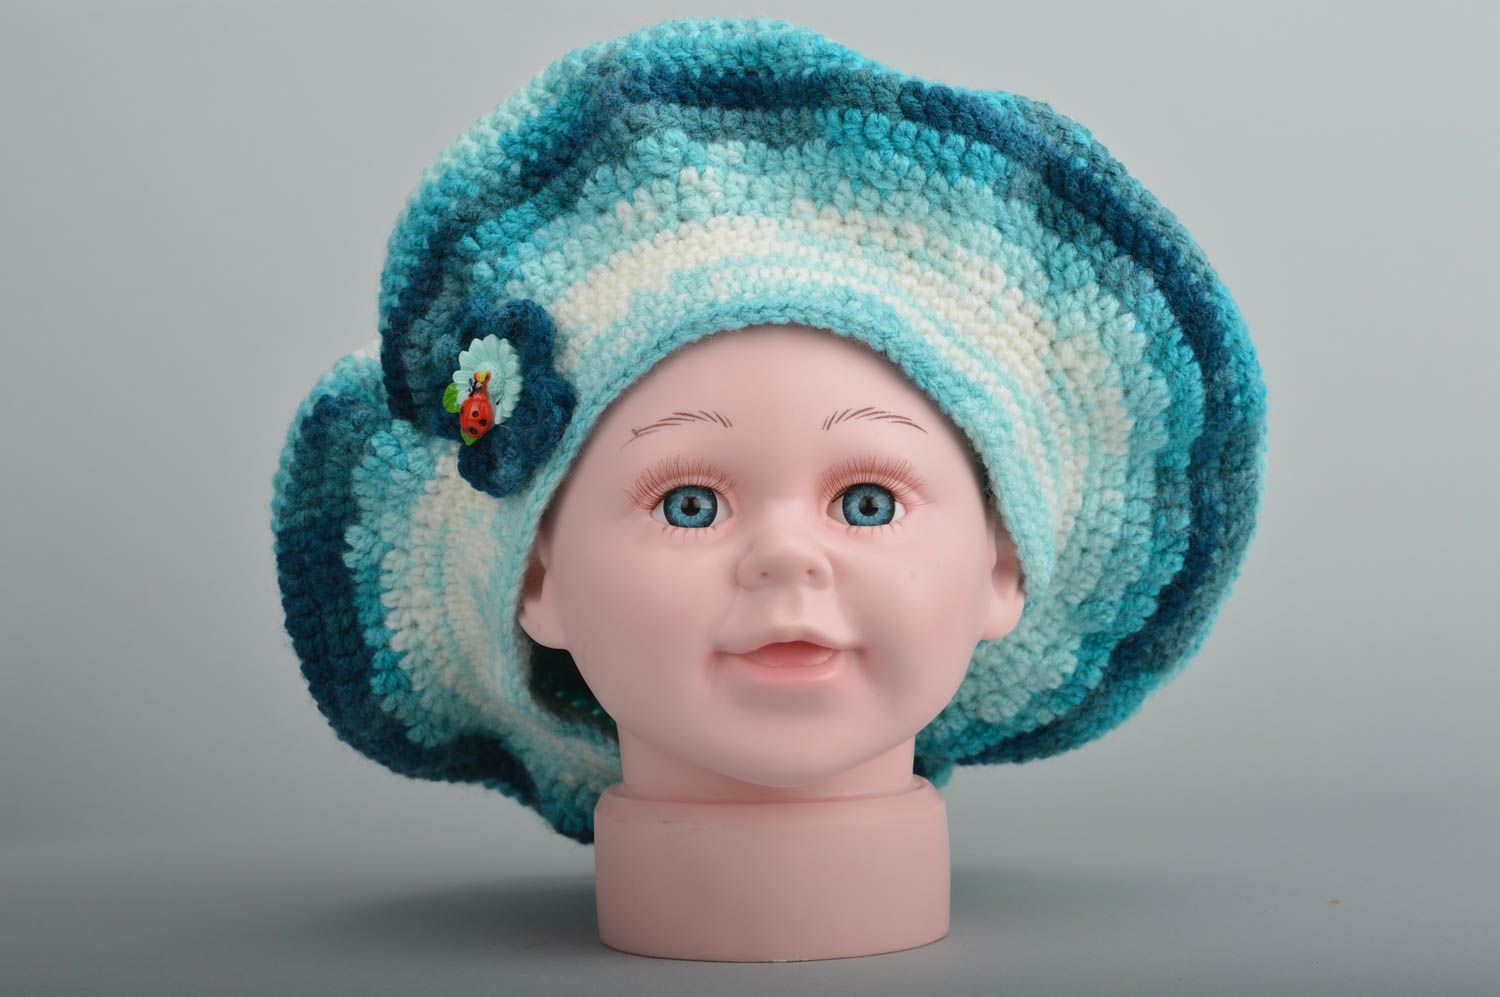 Woven unusual handmade beautiful designer cute cap in blue shades for kids photo 1